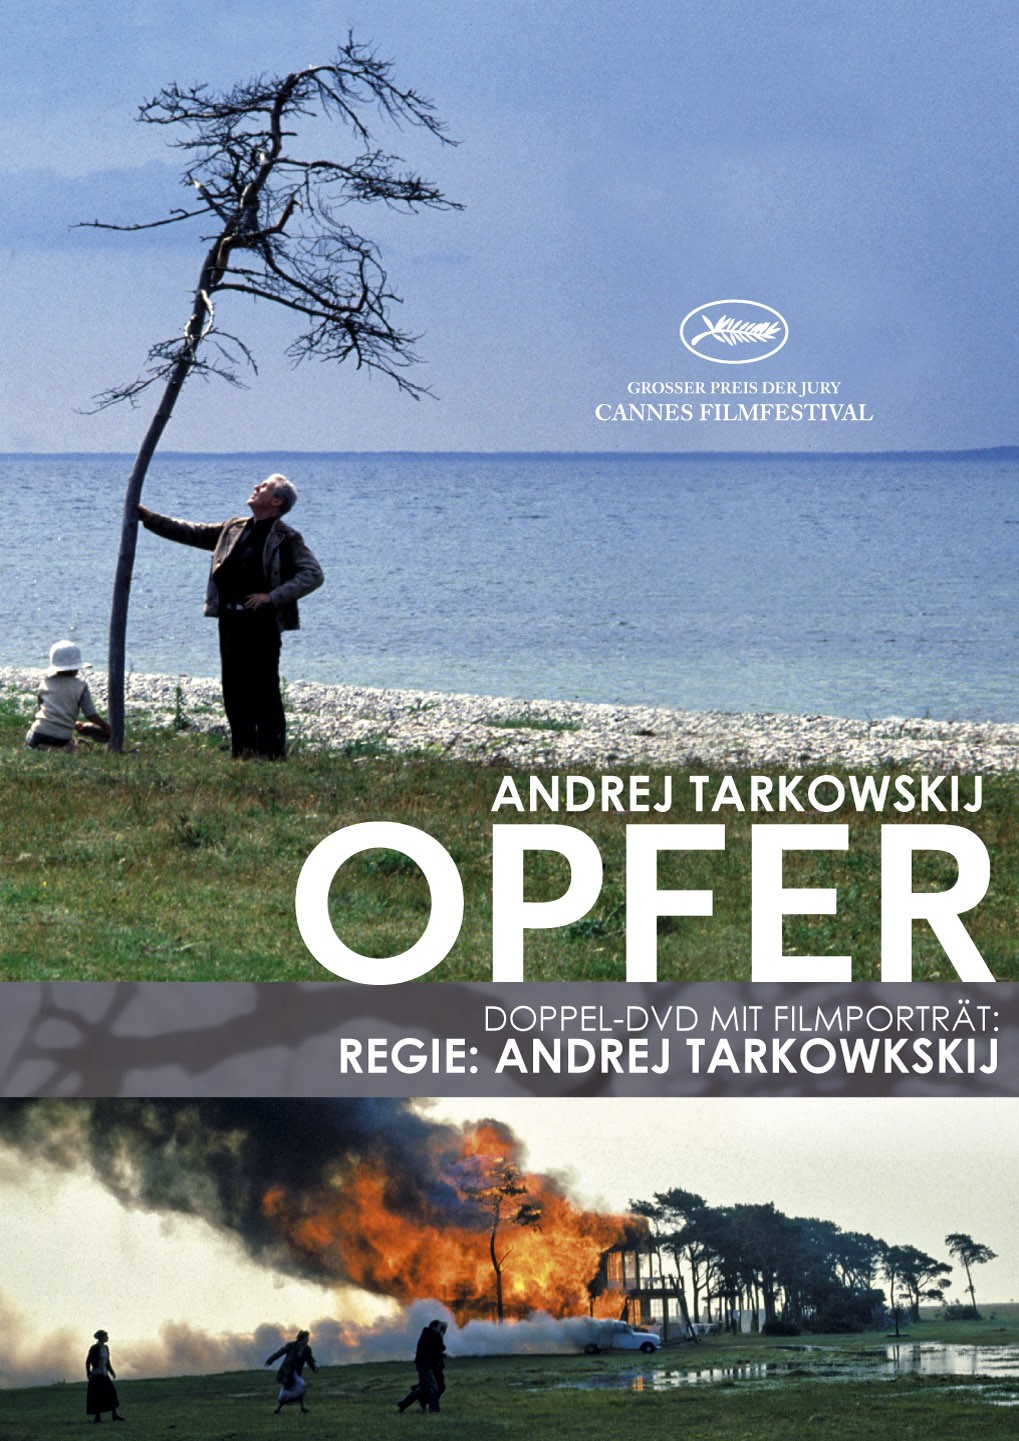 Andrej Tarkowskij